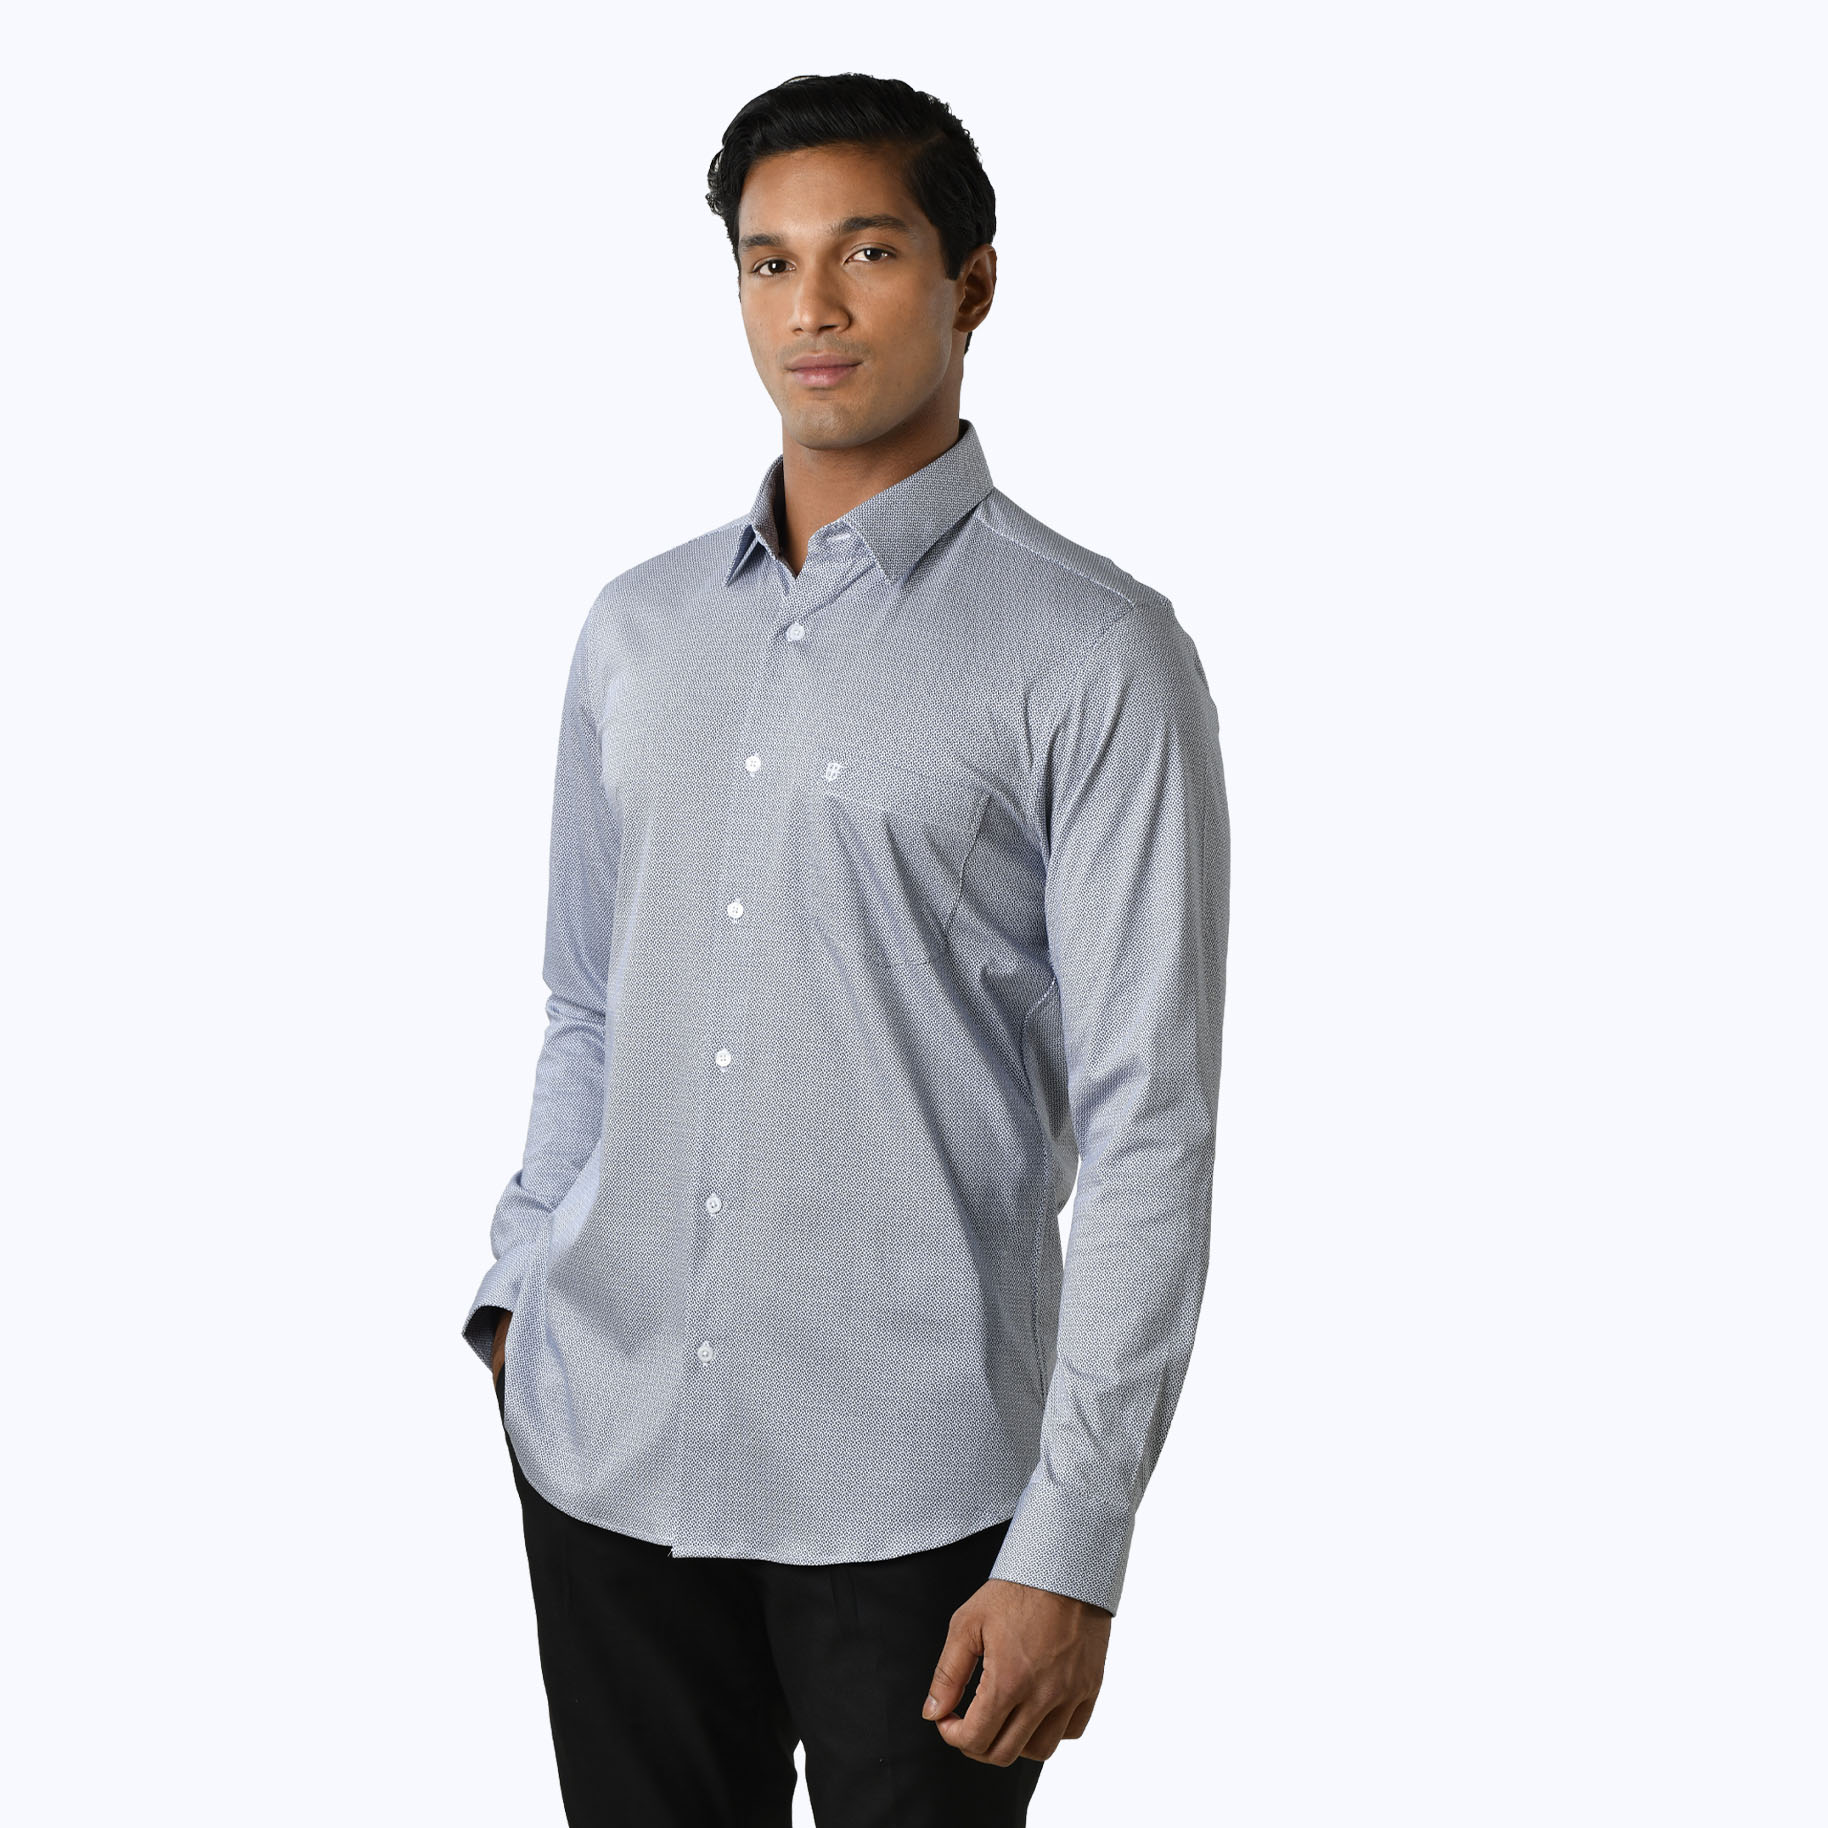 Super Comfort Knit Navy Blue Geo Print Wrinkle-Free Shirt - Bluefort